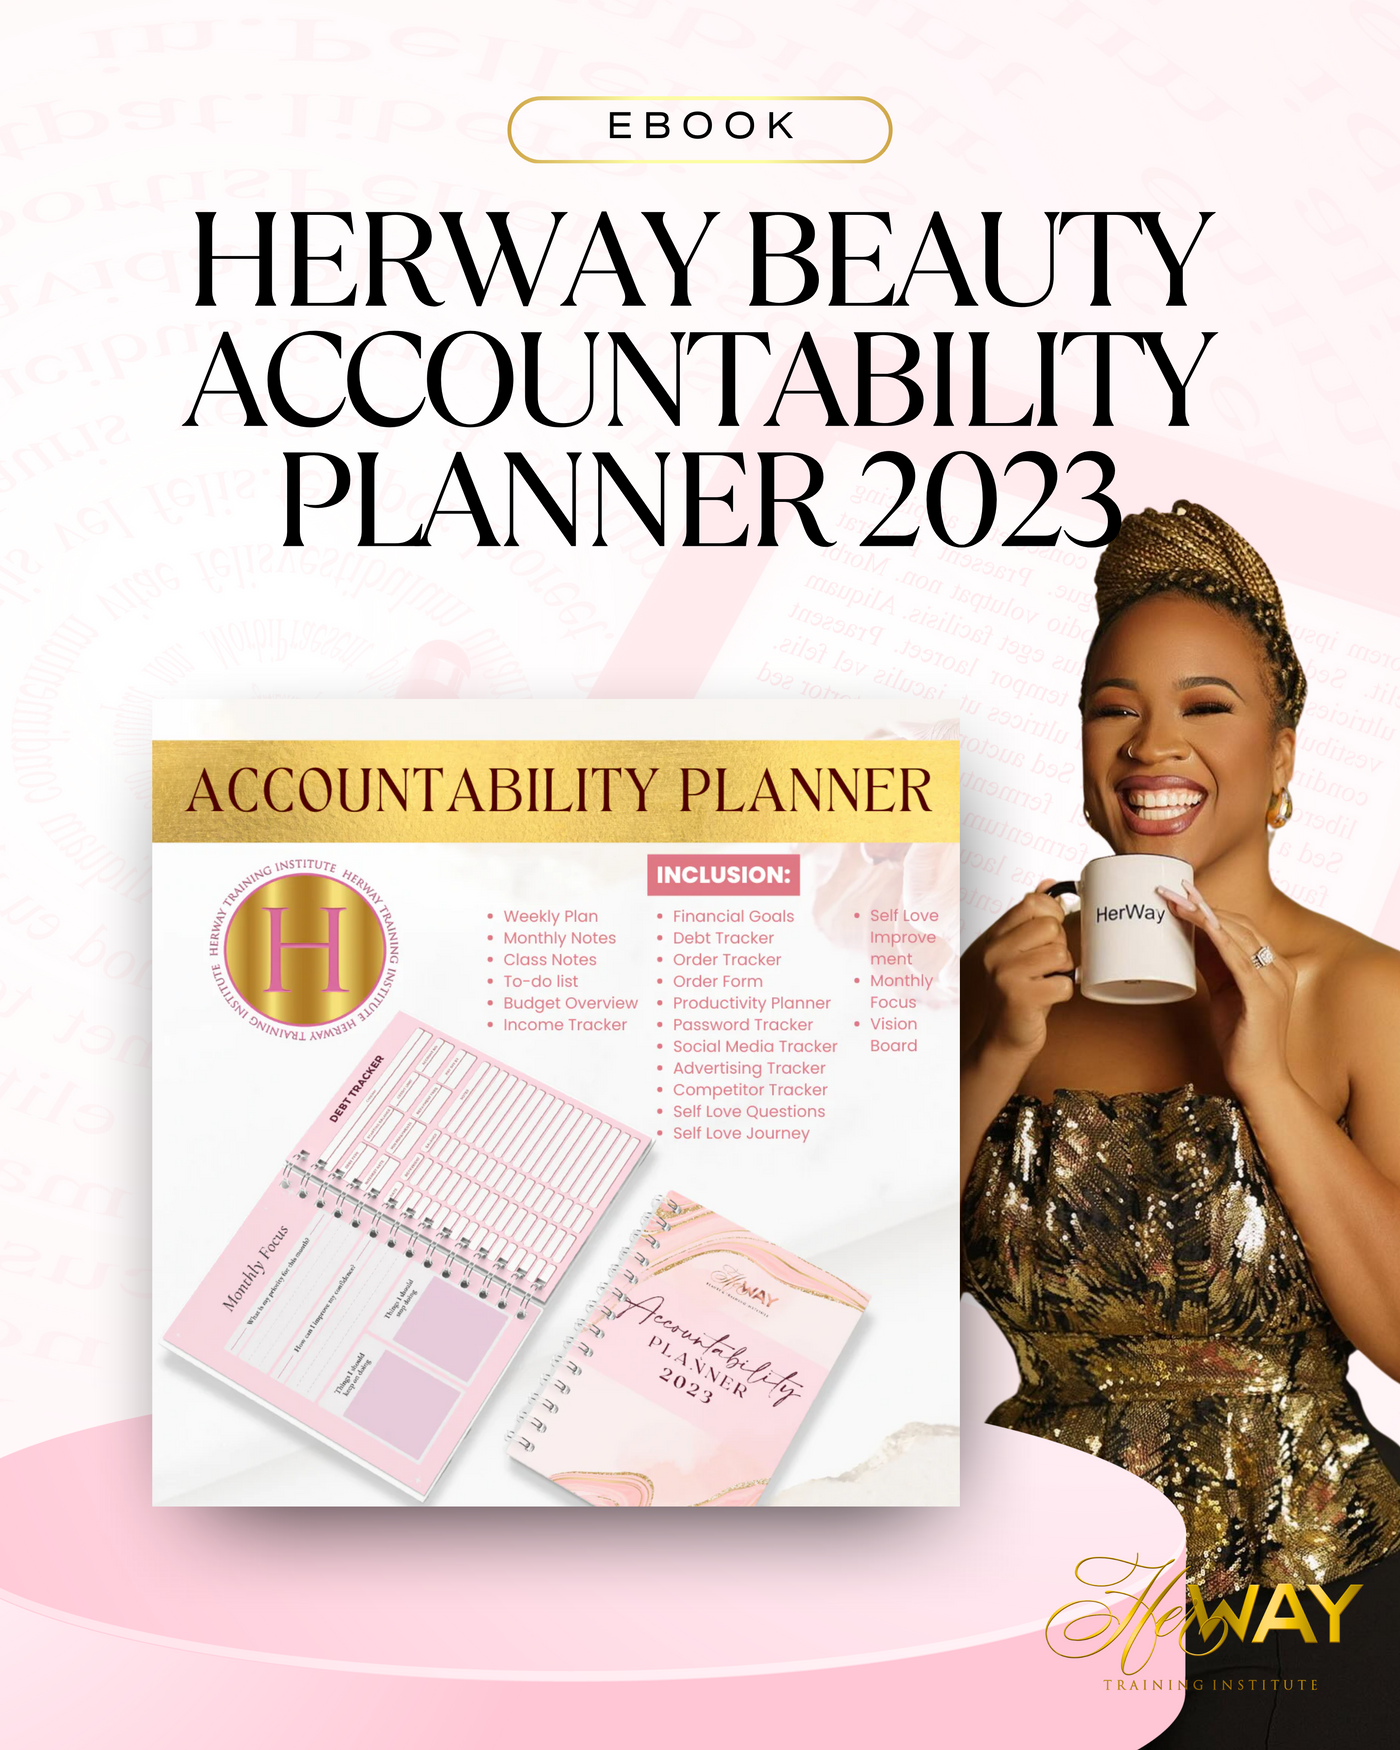 Herway Beauty - Accountability Planner 2023